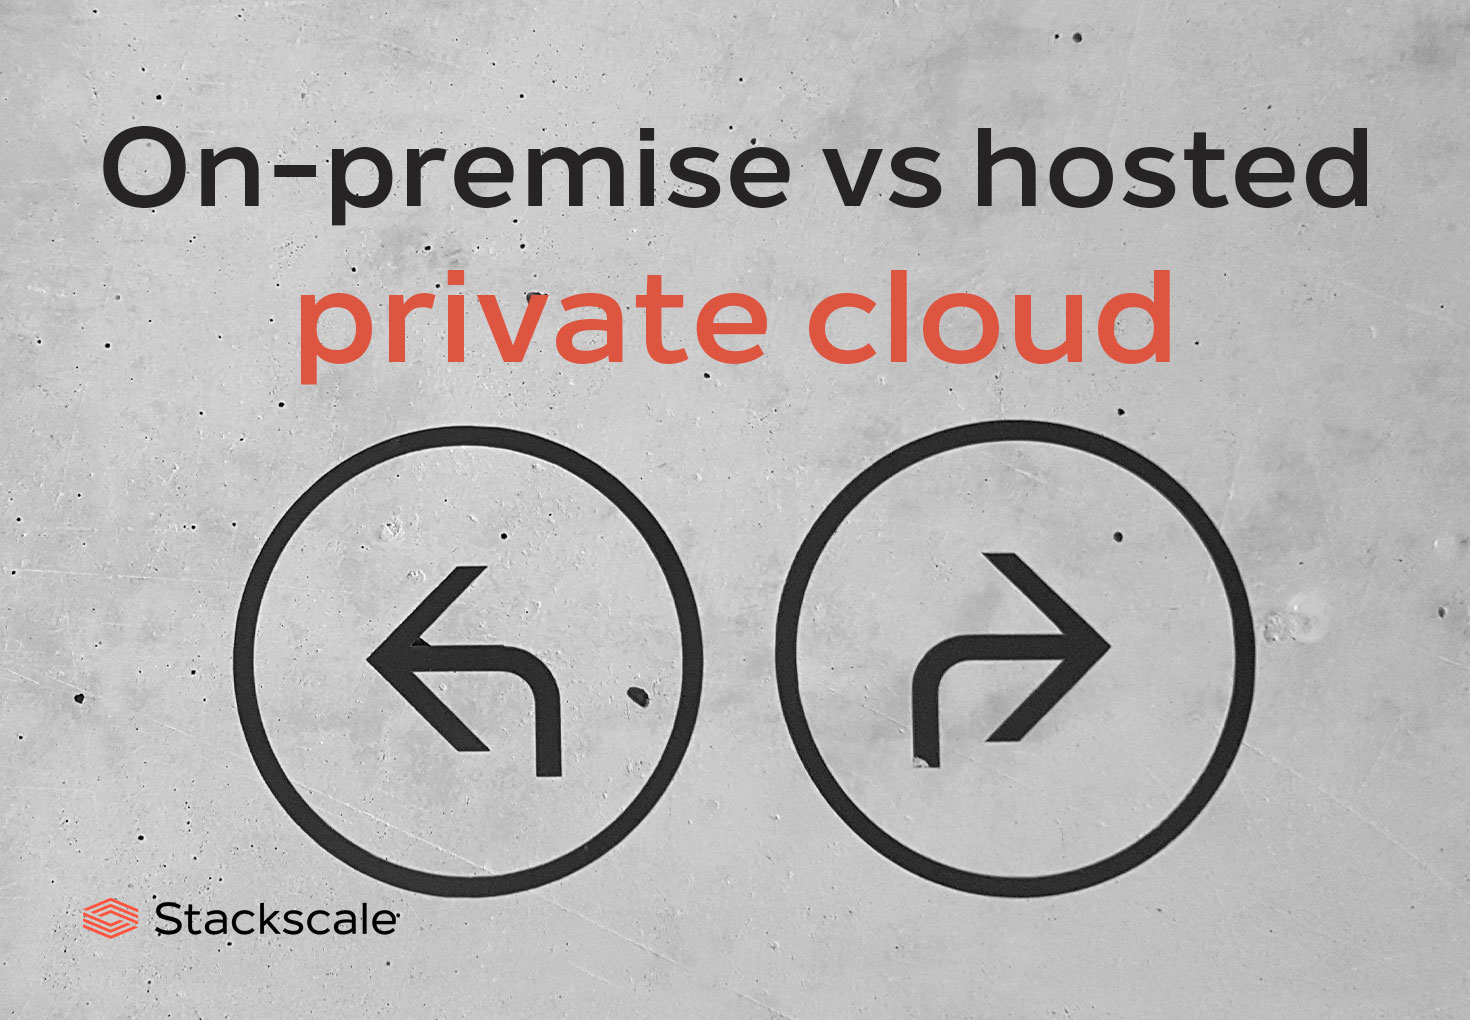 On-premise vs hosted private cloud comparison